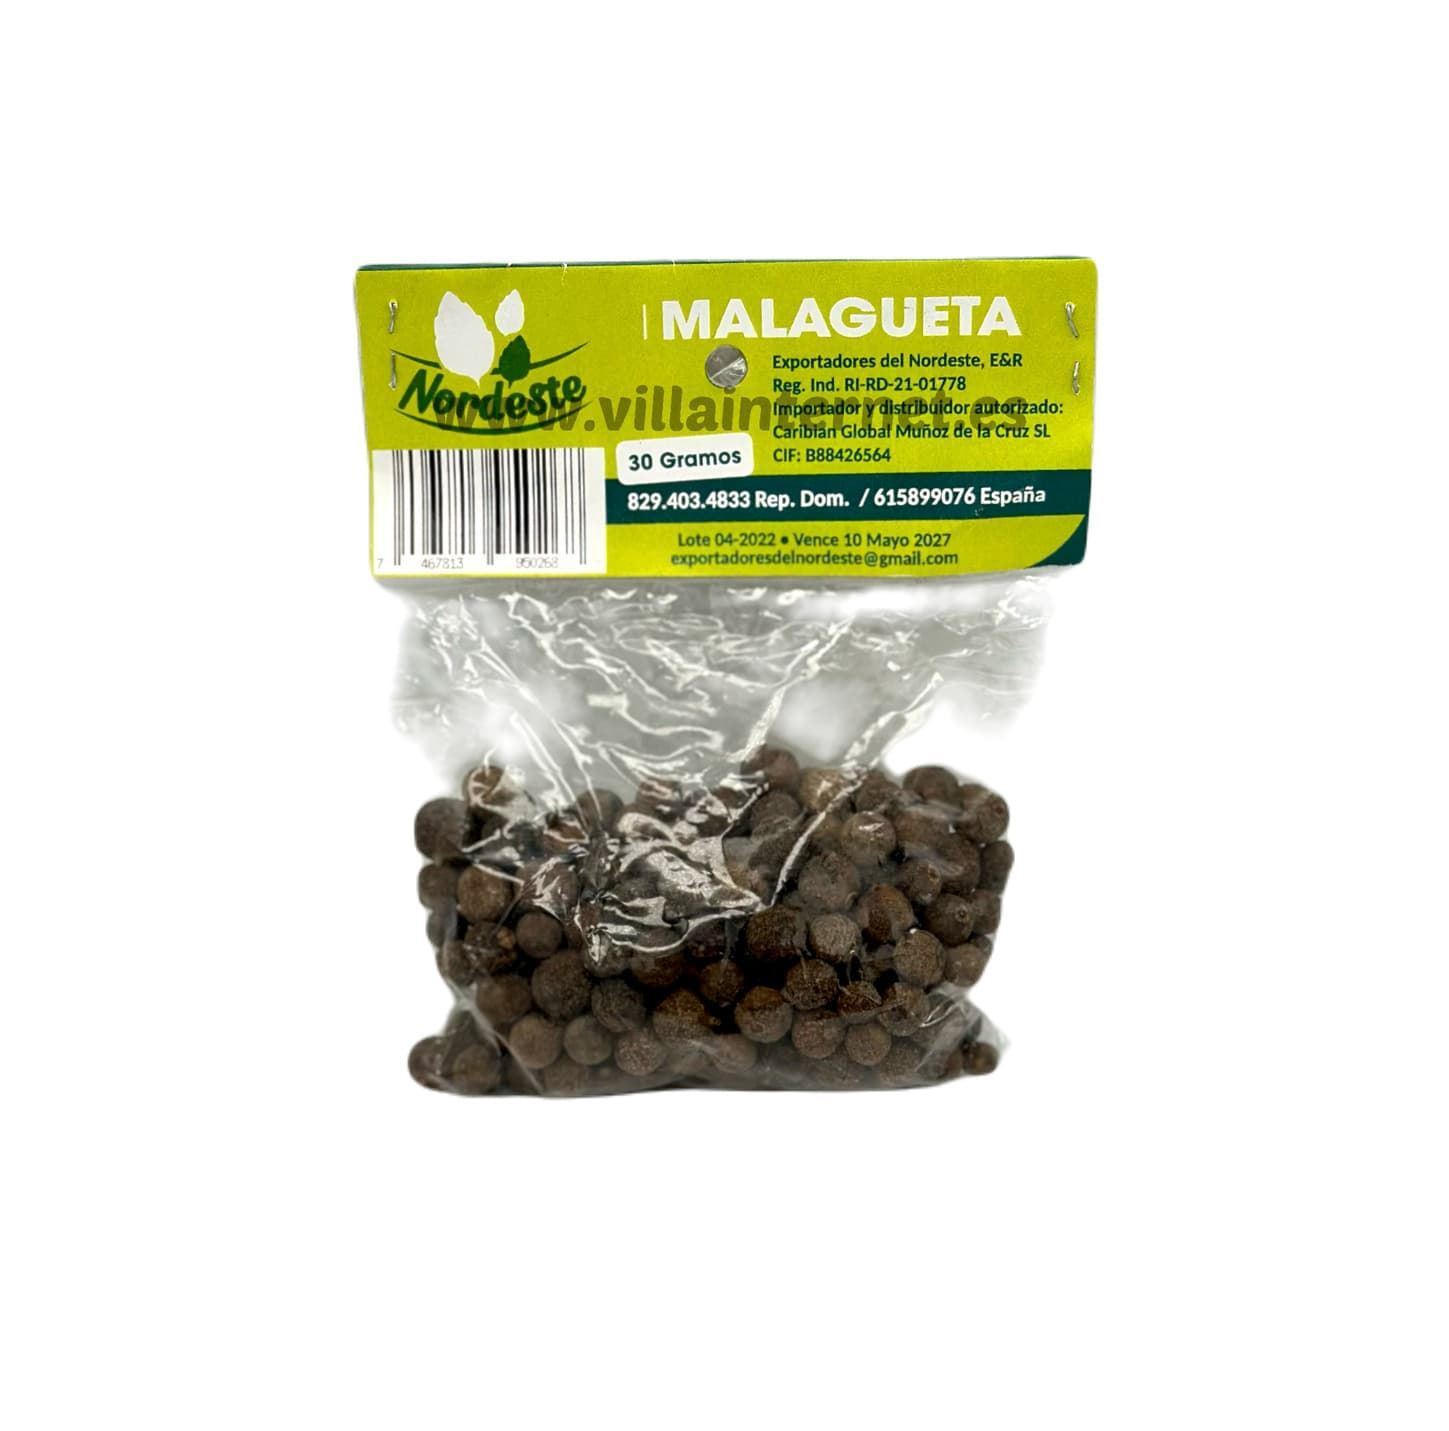 Pimienta malagueta 30g - Imagen 1